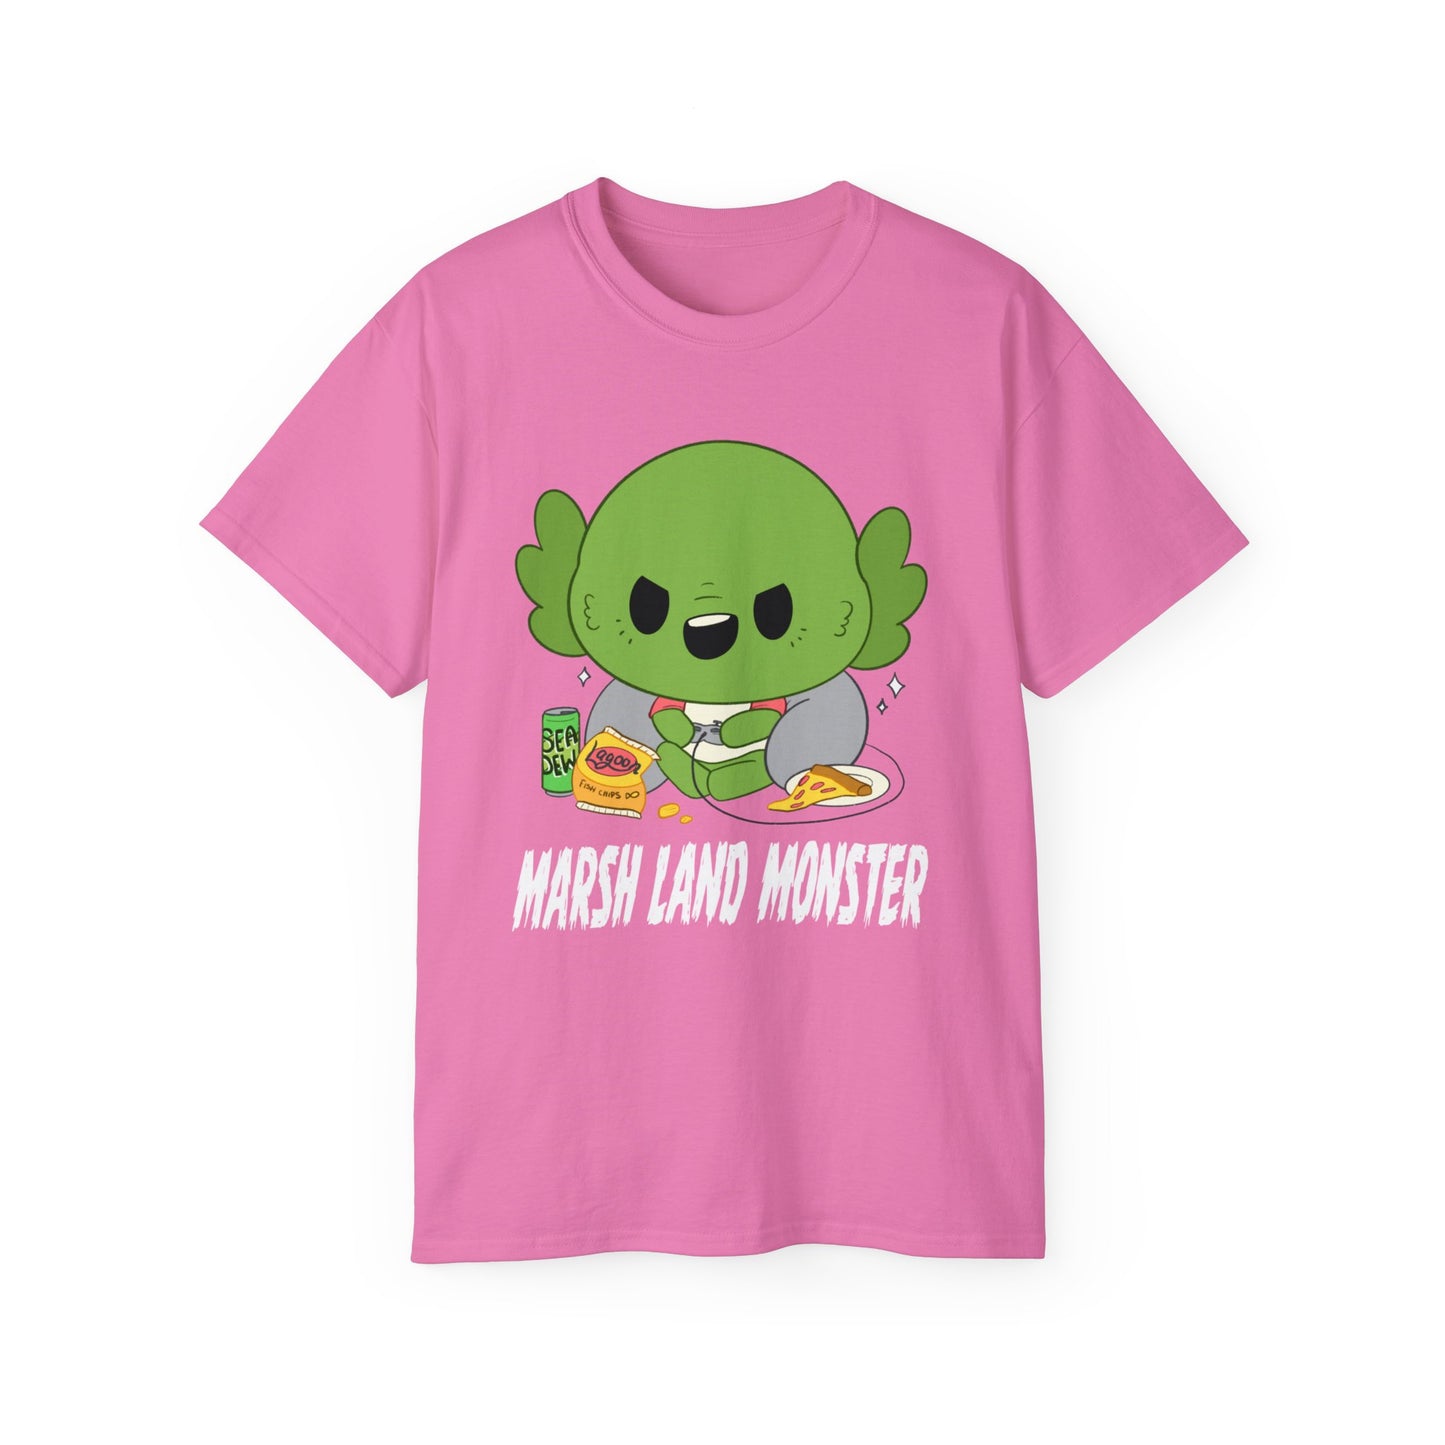 Marsh Land Monster Video Games Unisex Ultra Cotton Tee